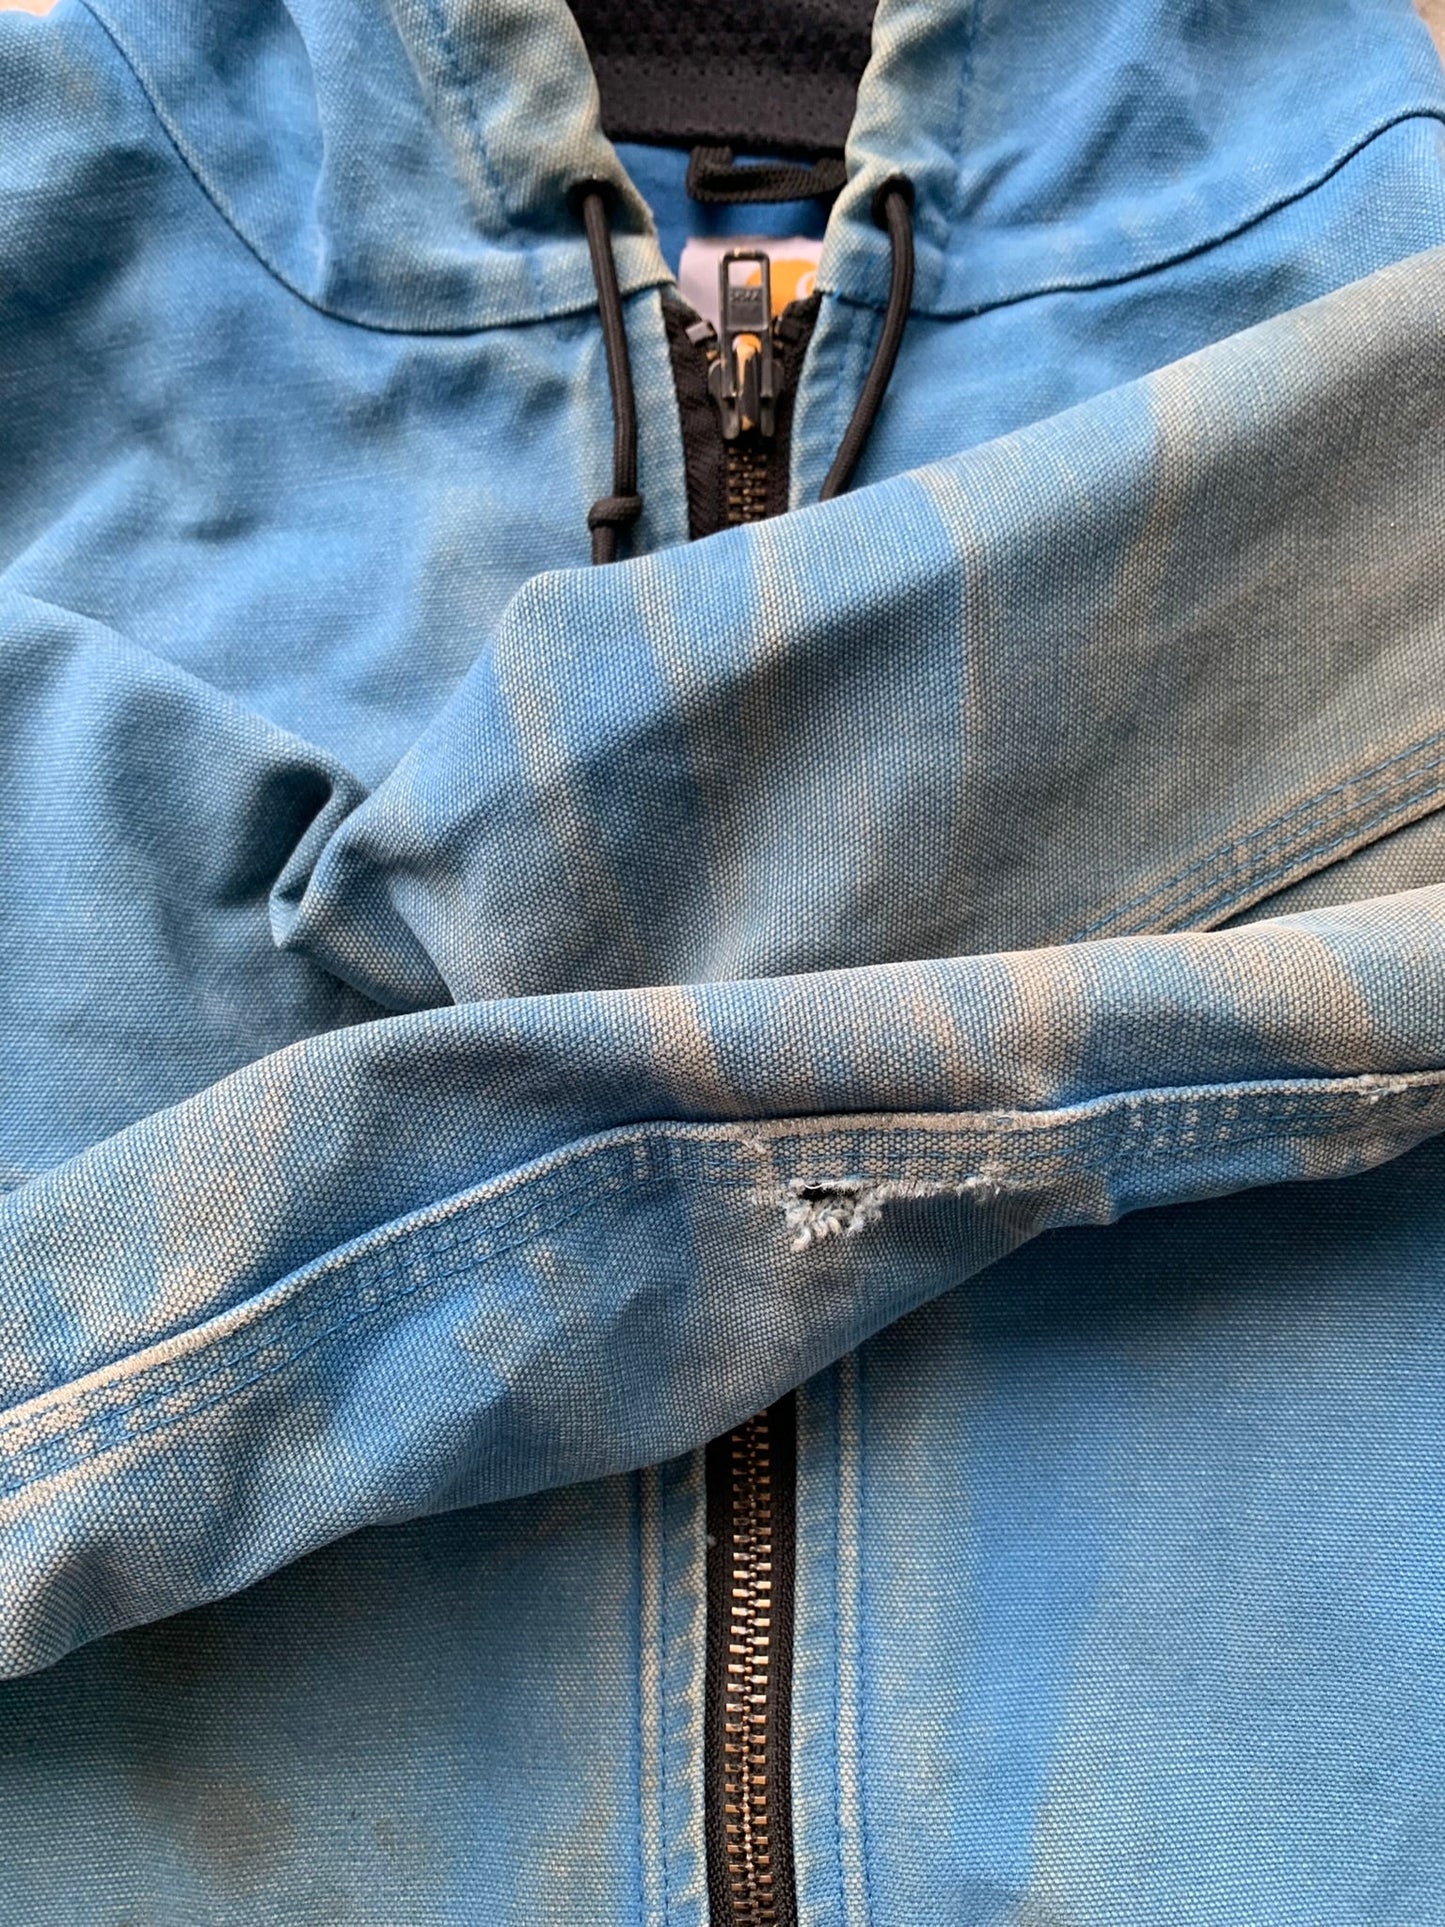 (XL/2X) Vintage Distressed Aqua Blue Carhartt Hooded